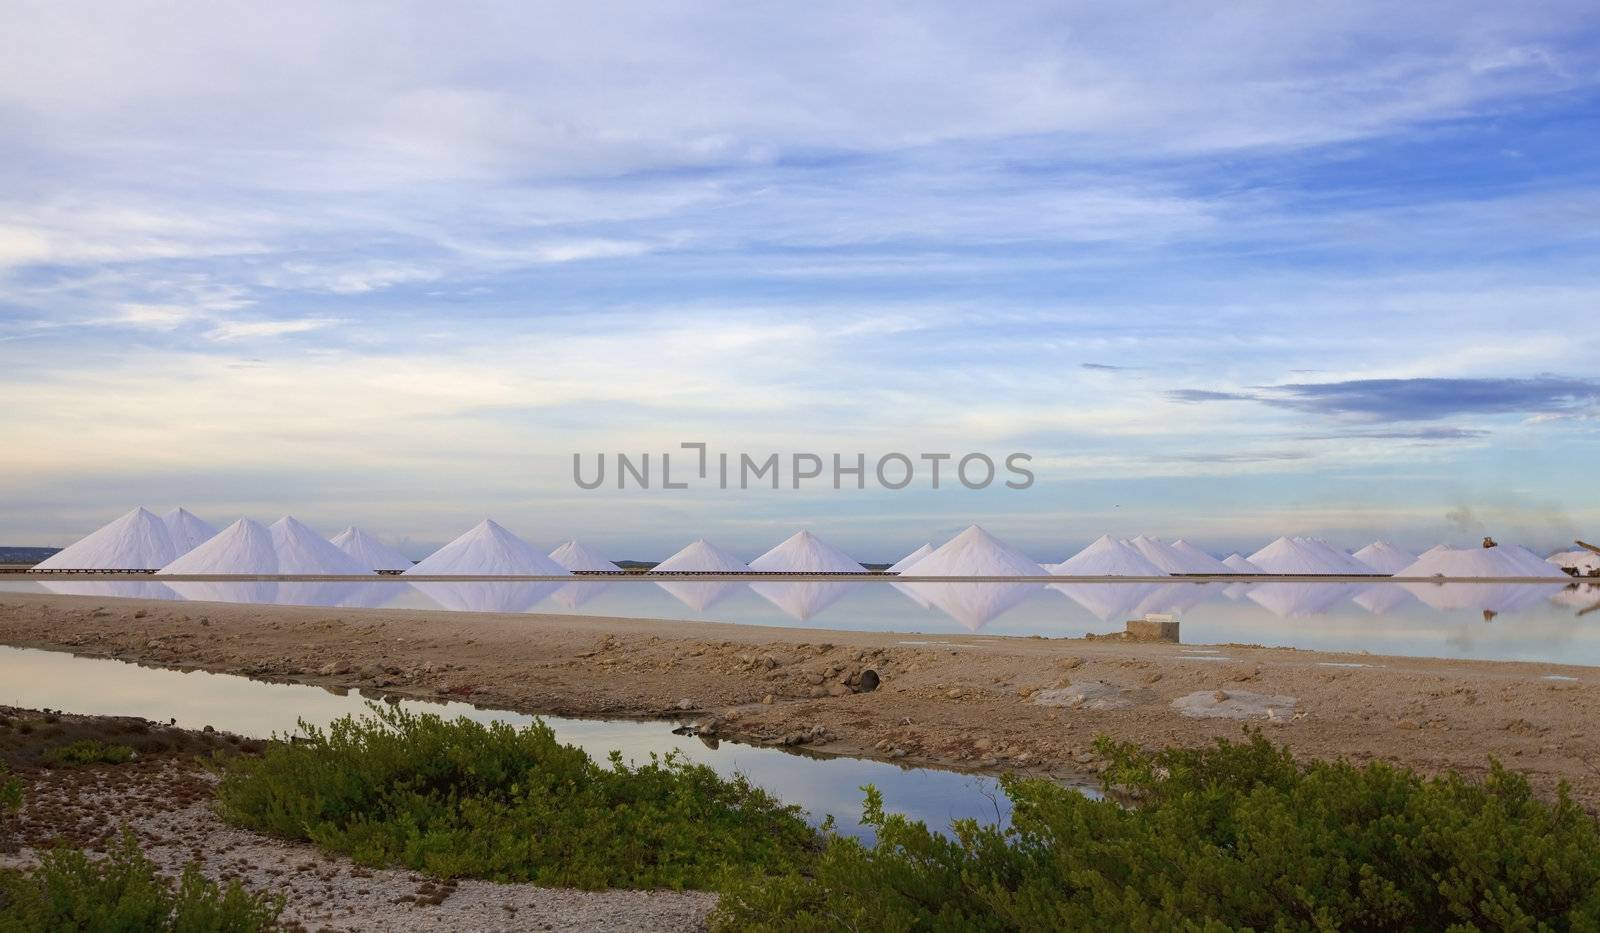 Salt mountains reflecting in the salt lake at Bonaire